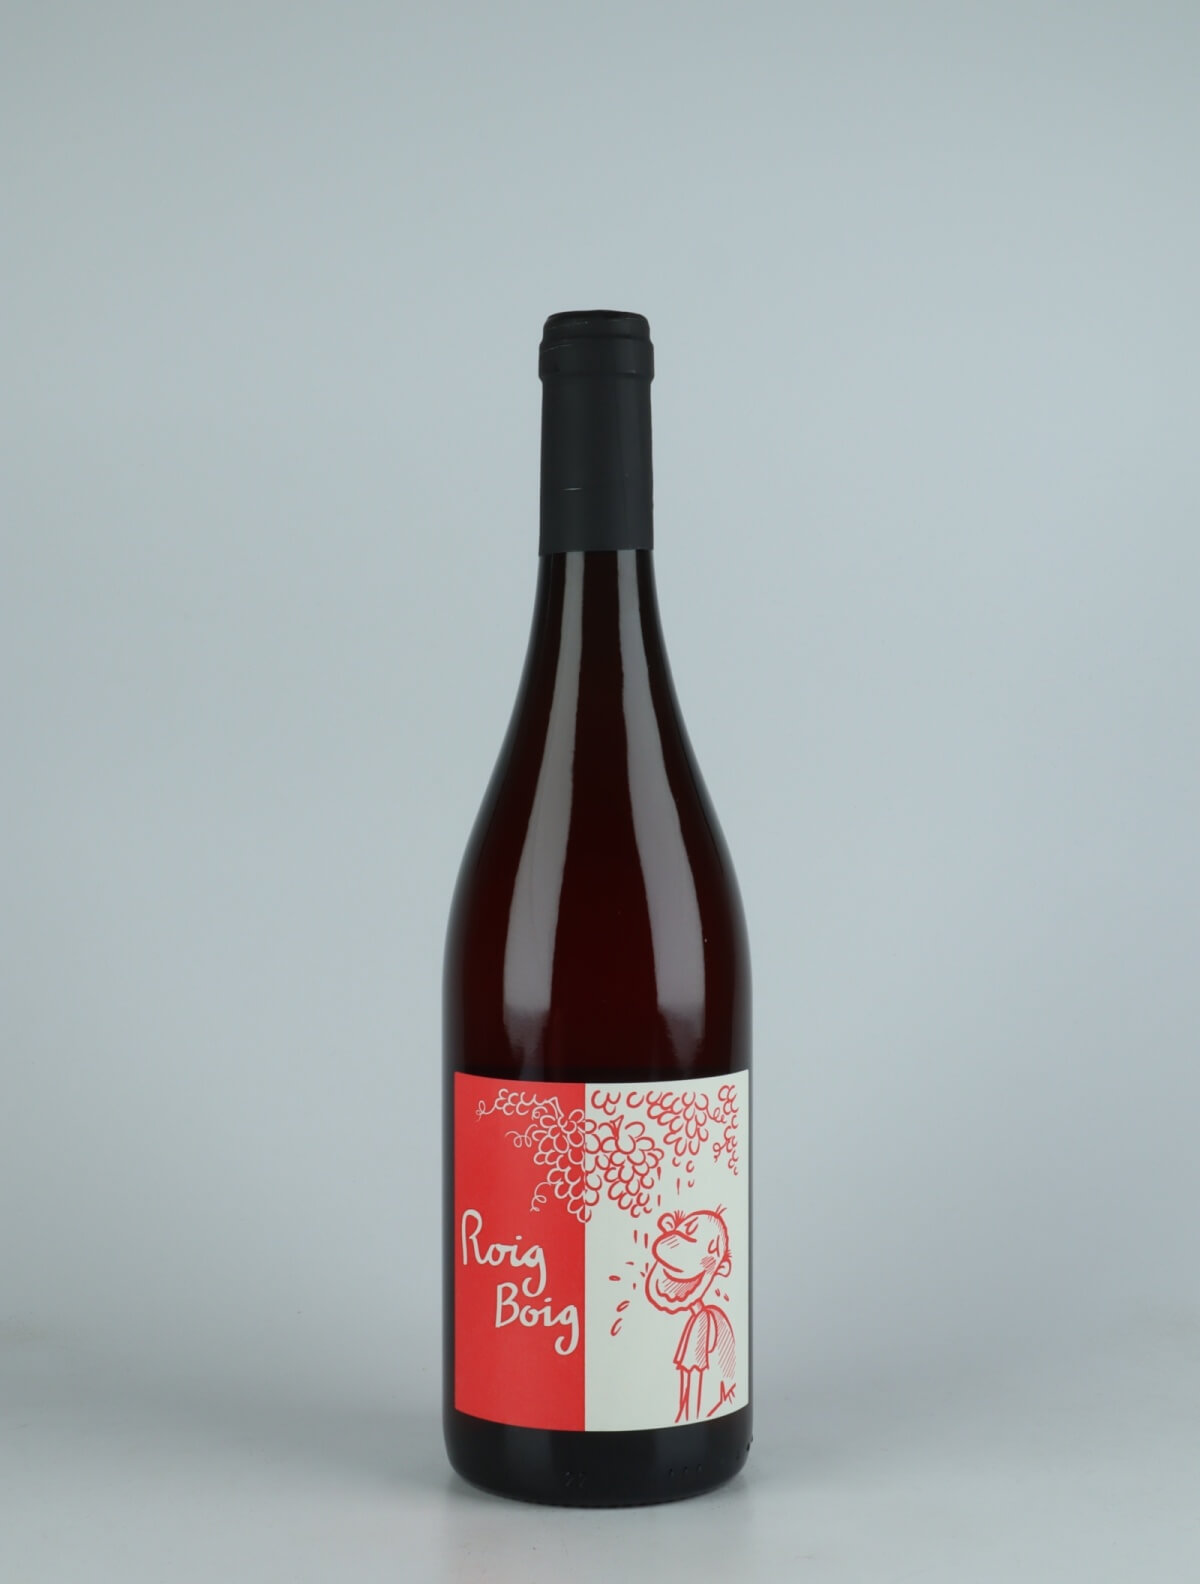 A bottle 2021 Roig Boig  - Tranquil Rosé from Celler la Salada, Penedès in Spain